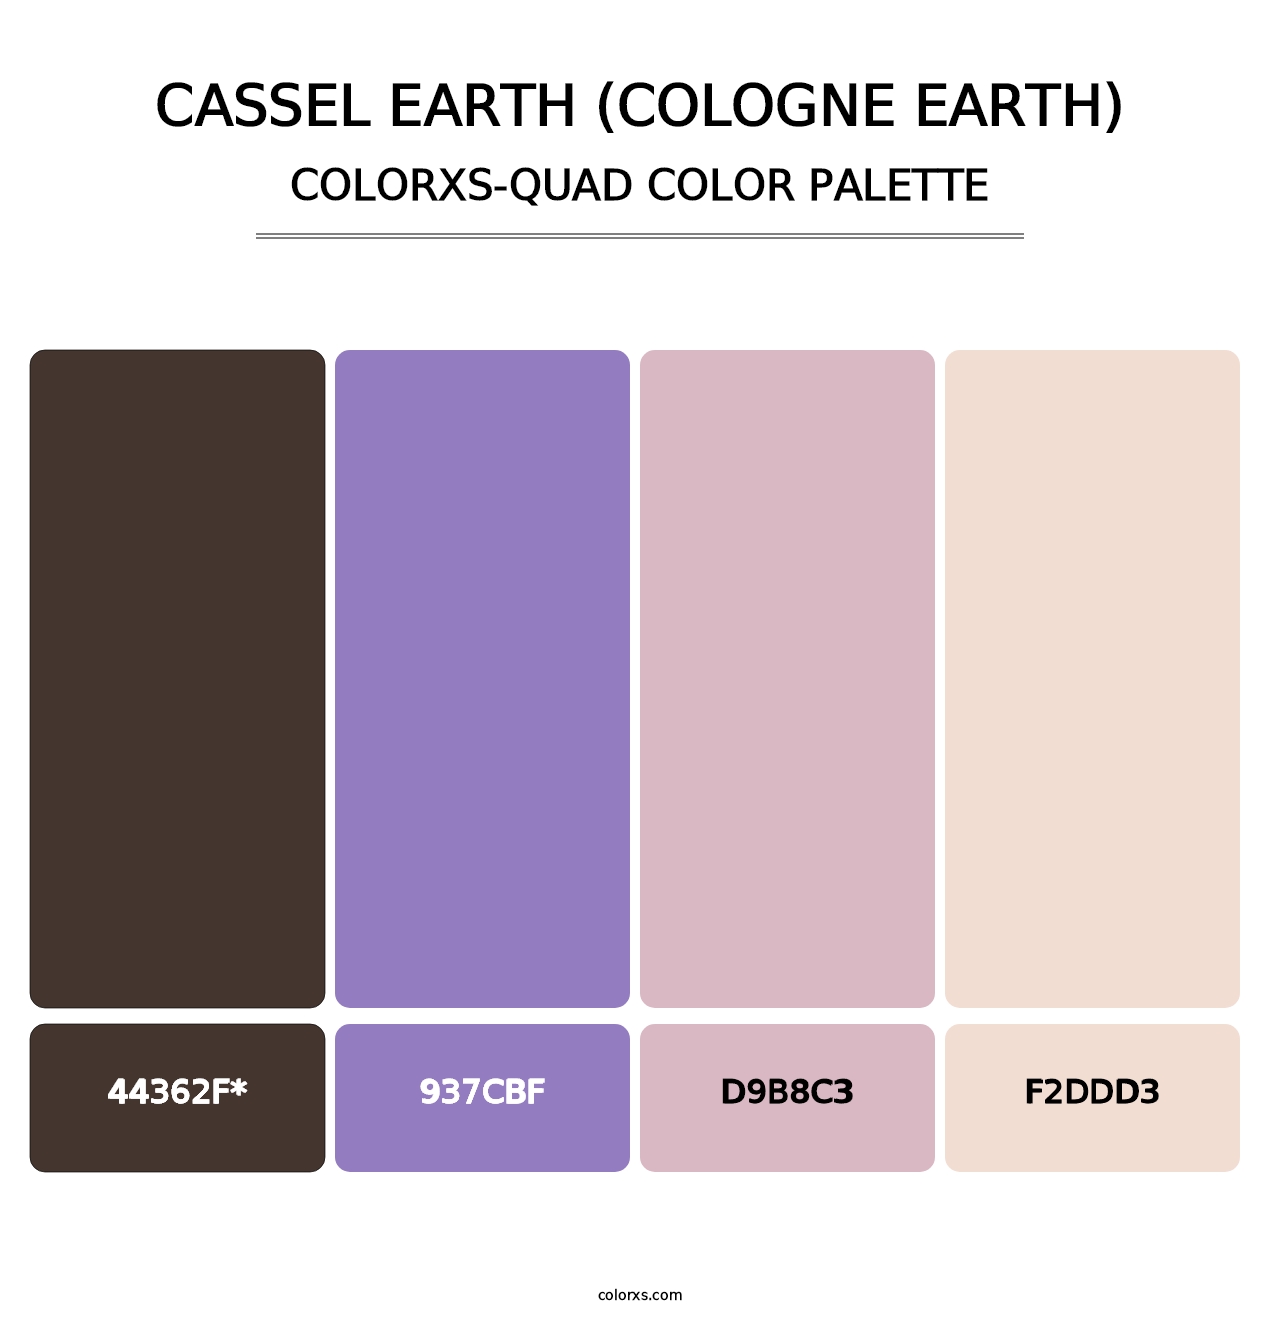 Cassel Earth (Cologne Earth) - Colorxs Quad Palette